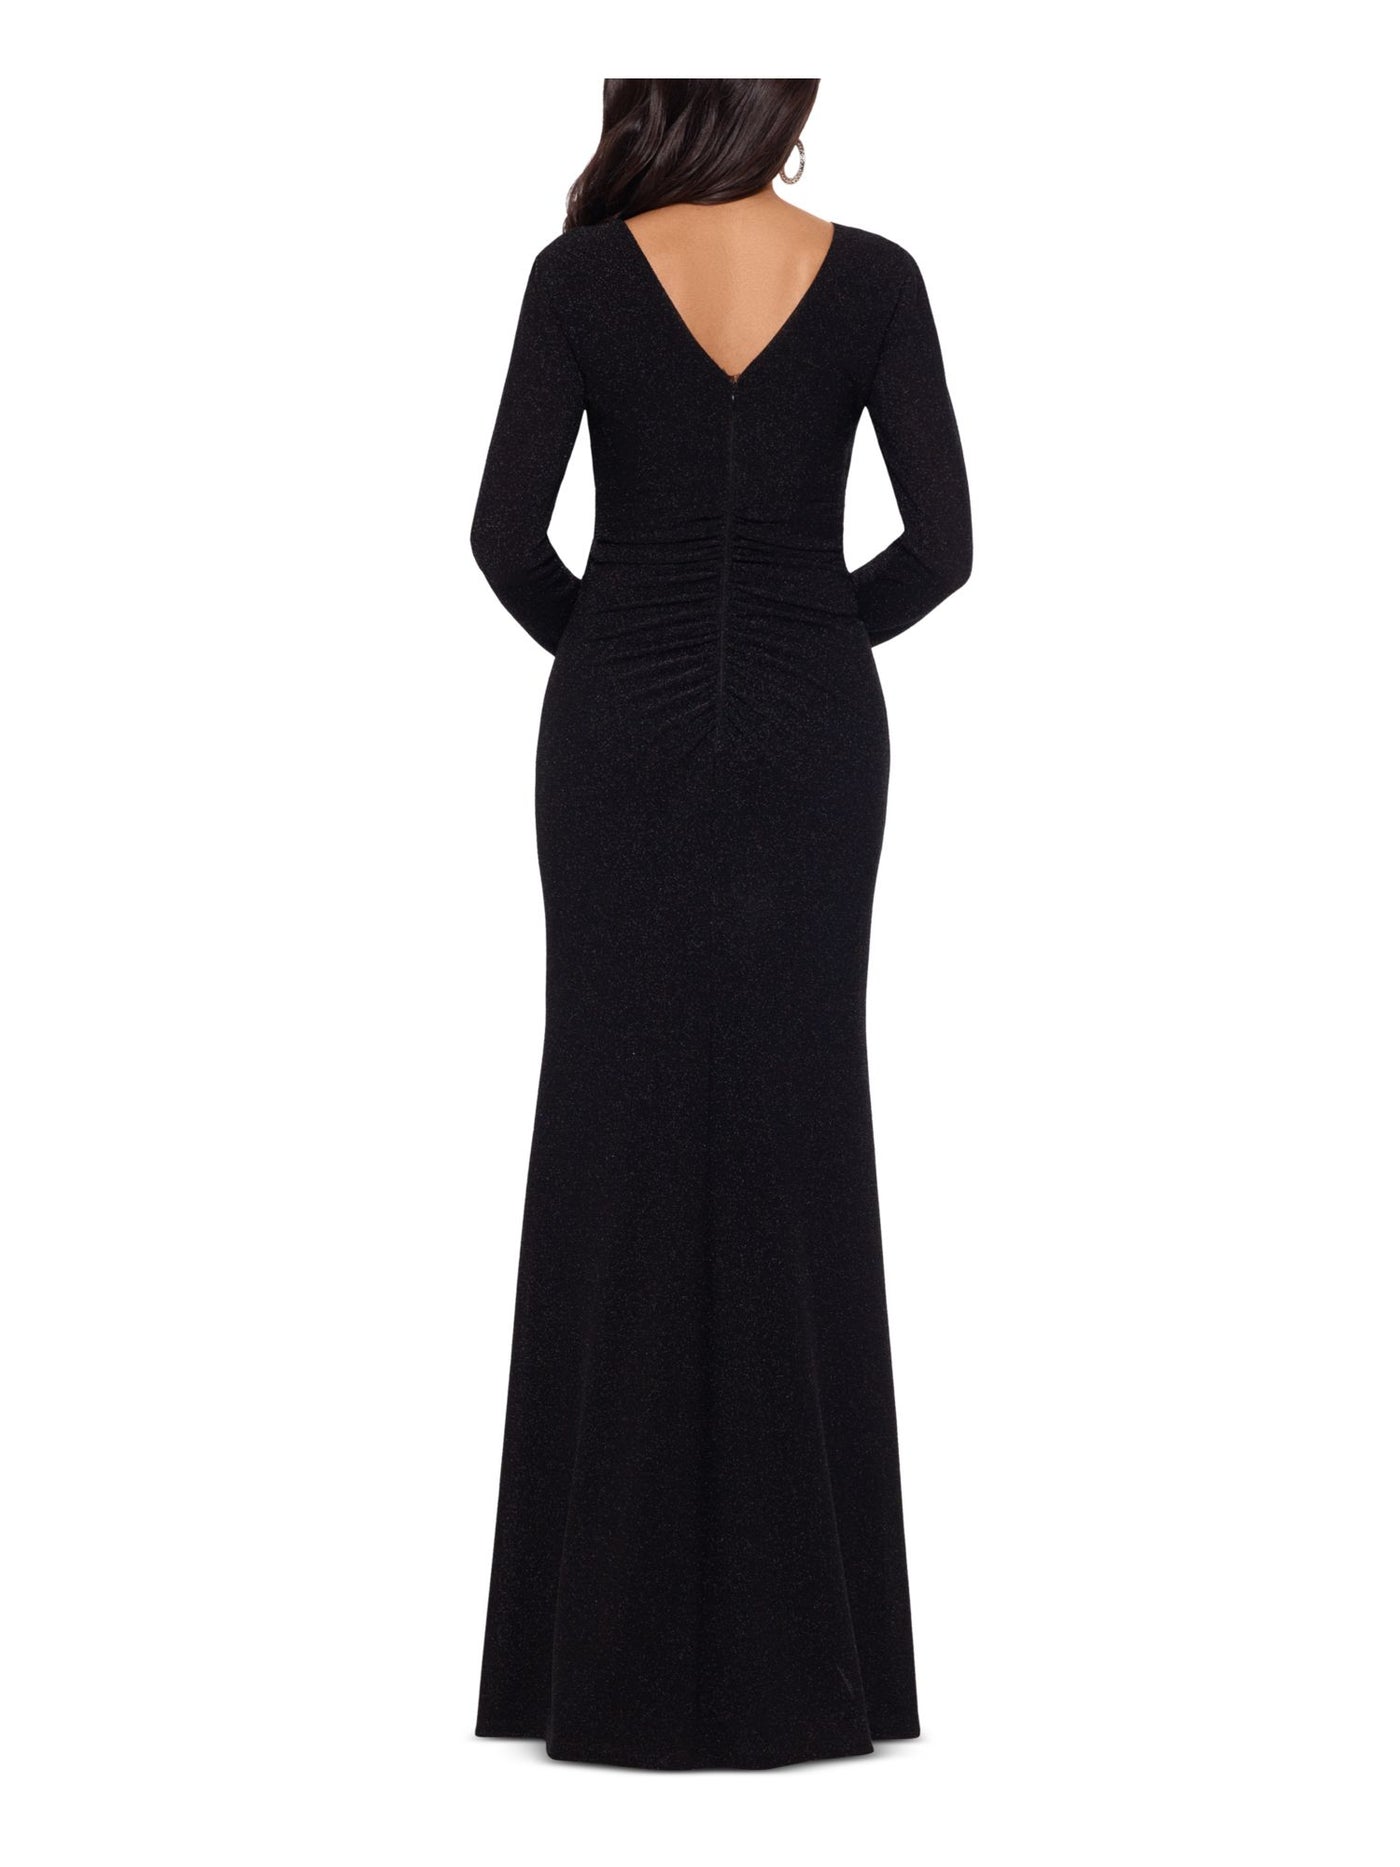 X BY XSCAPE Womens Black Long Sleeve V Neck Full-Length Formal Sheath Dress 4